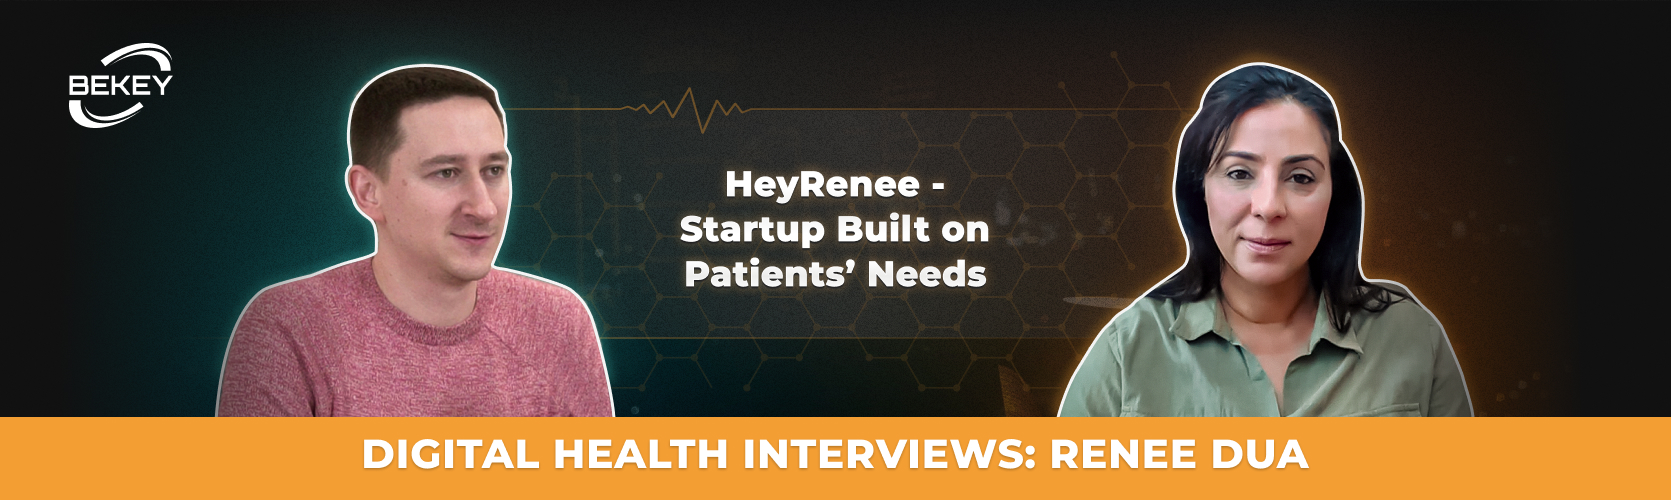 Renee Dua - digital health interview